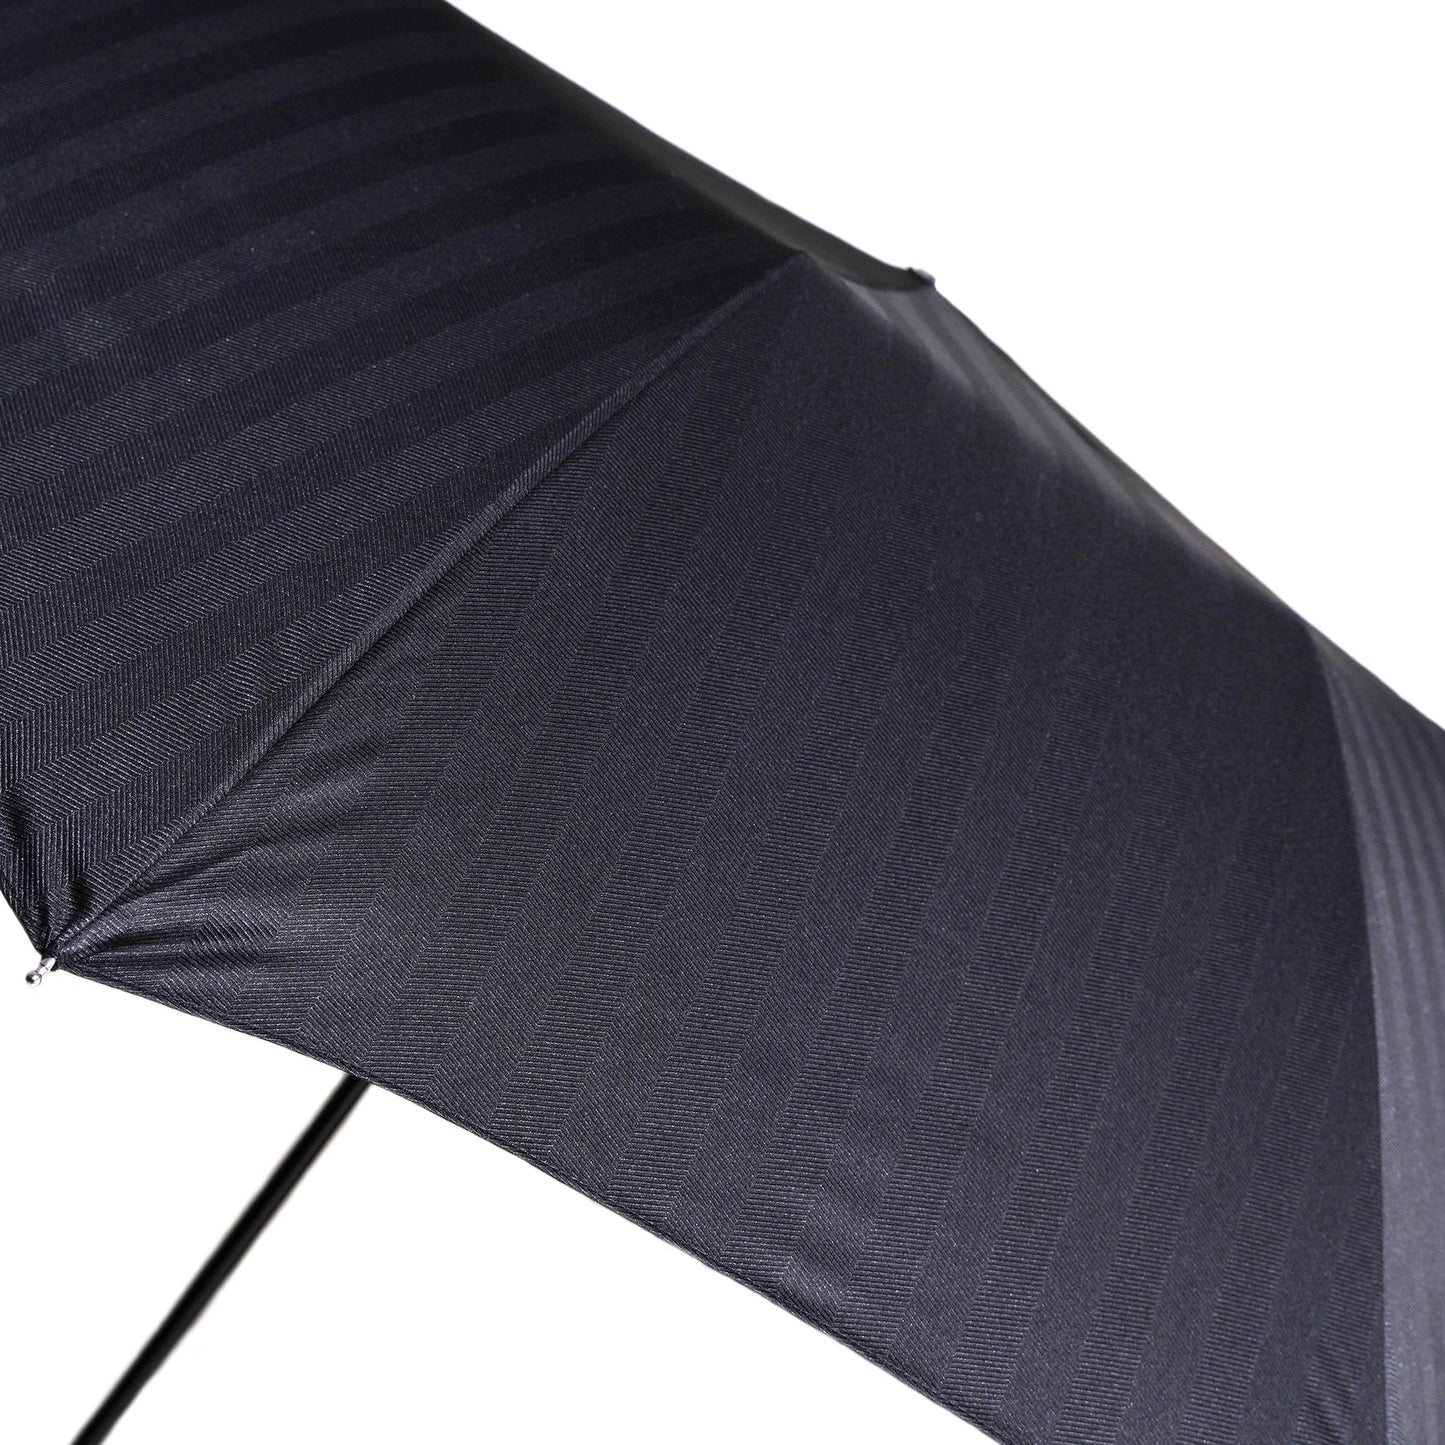 Anti-UV Rain & Sun Umbrella  "Makita Standard"